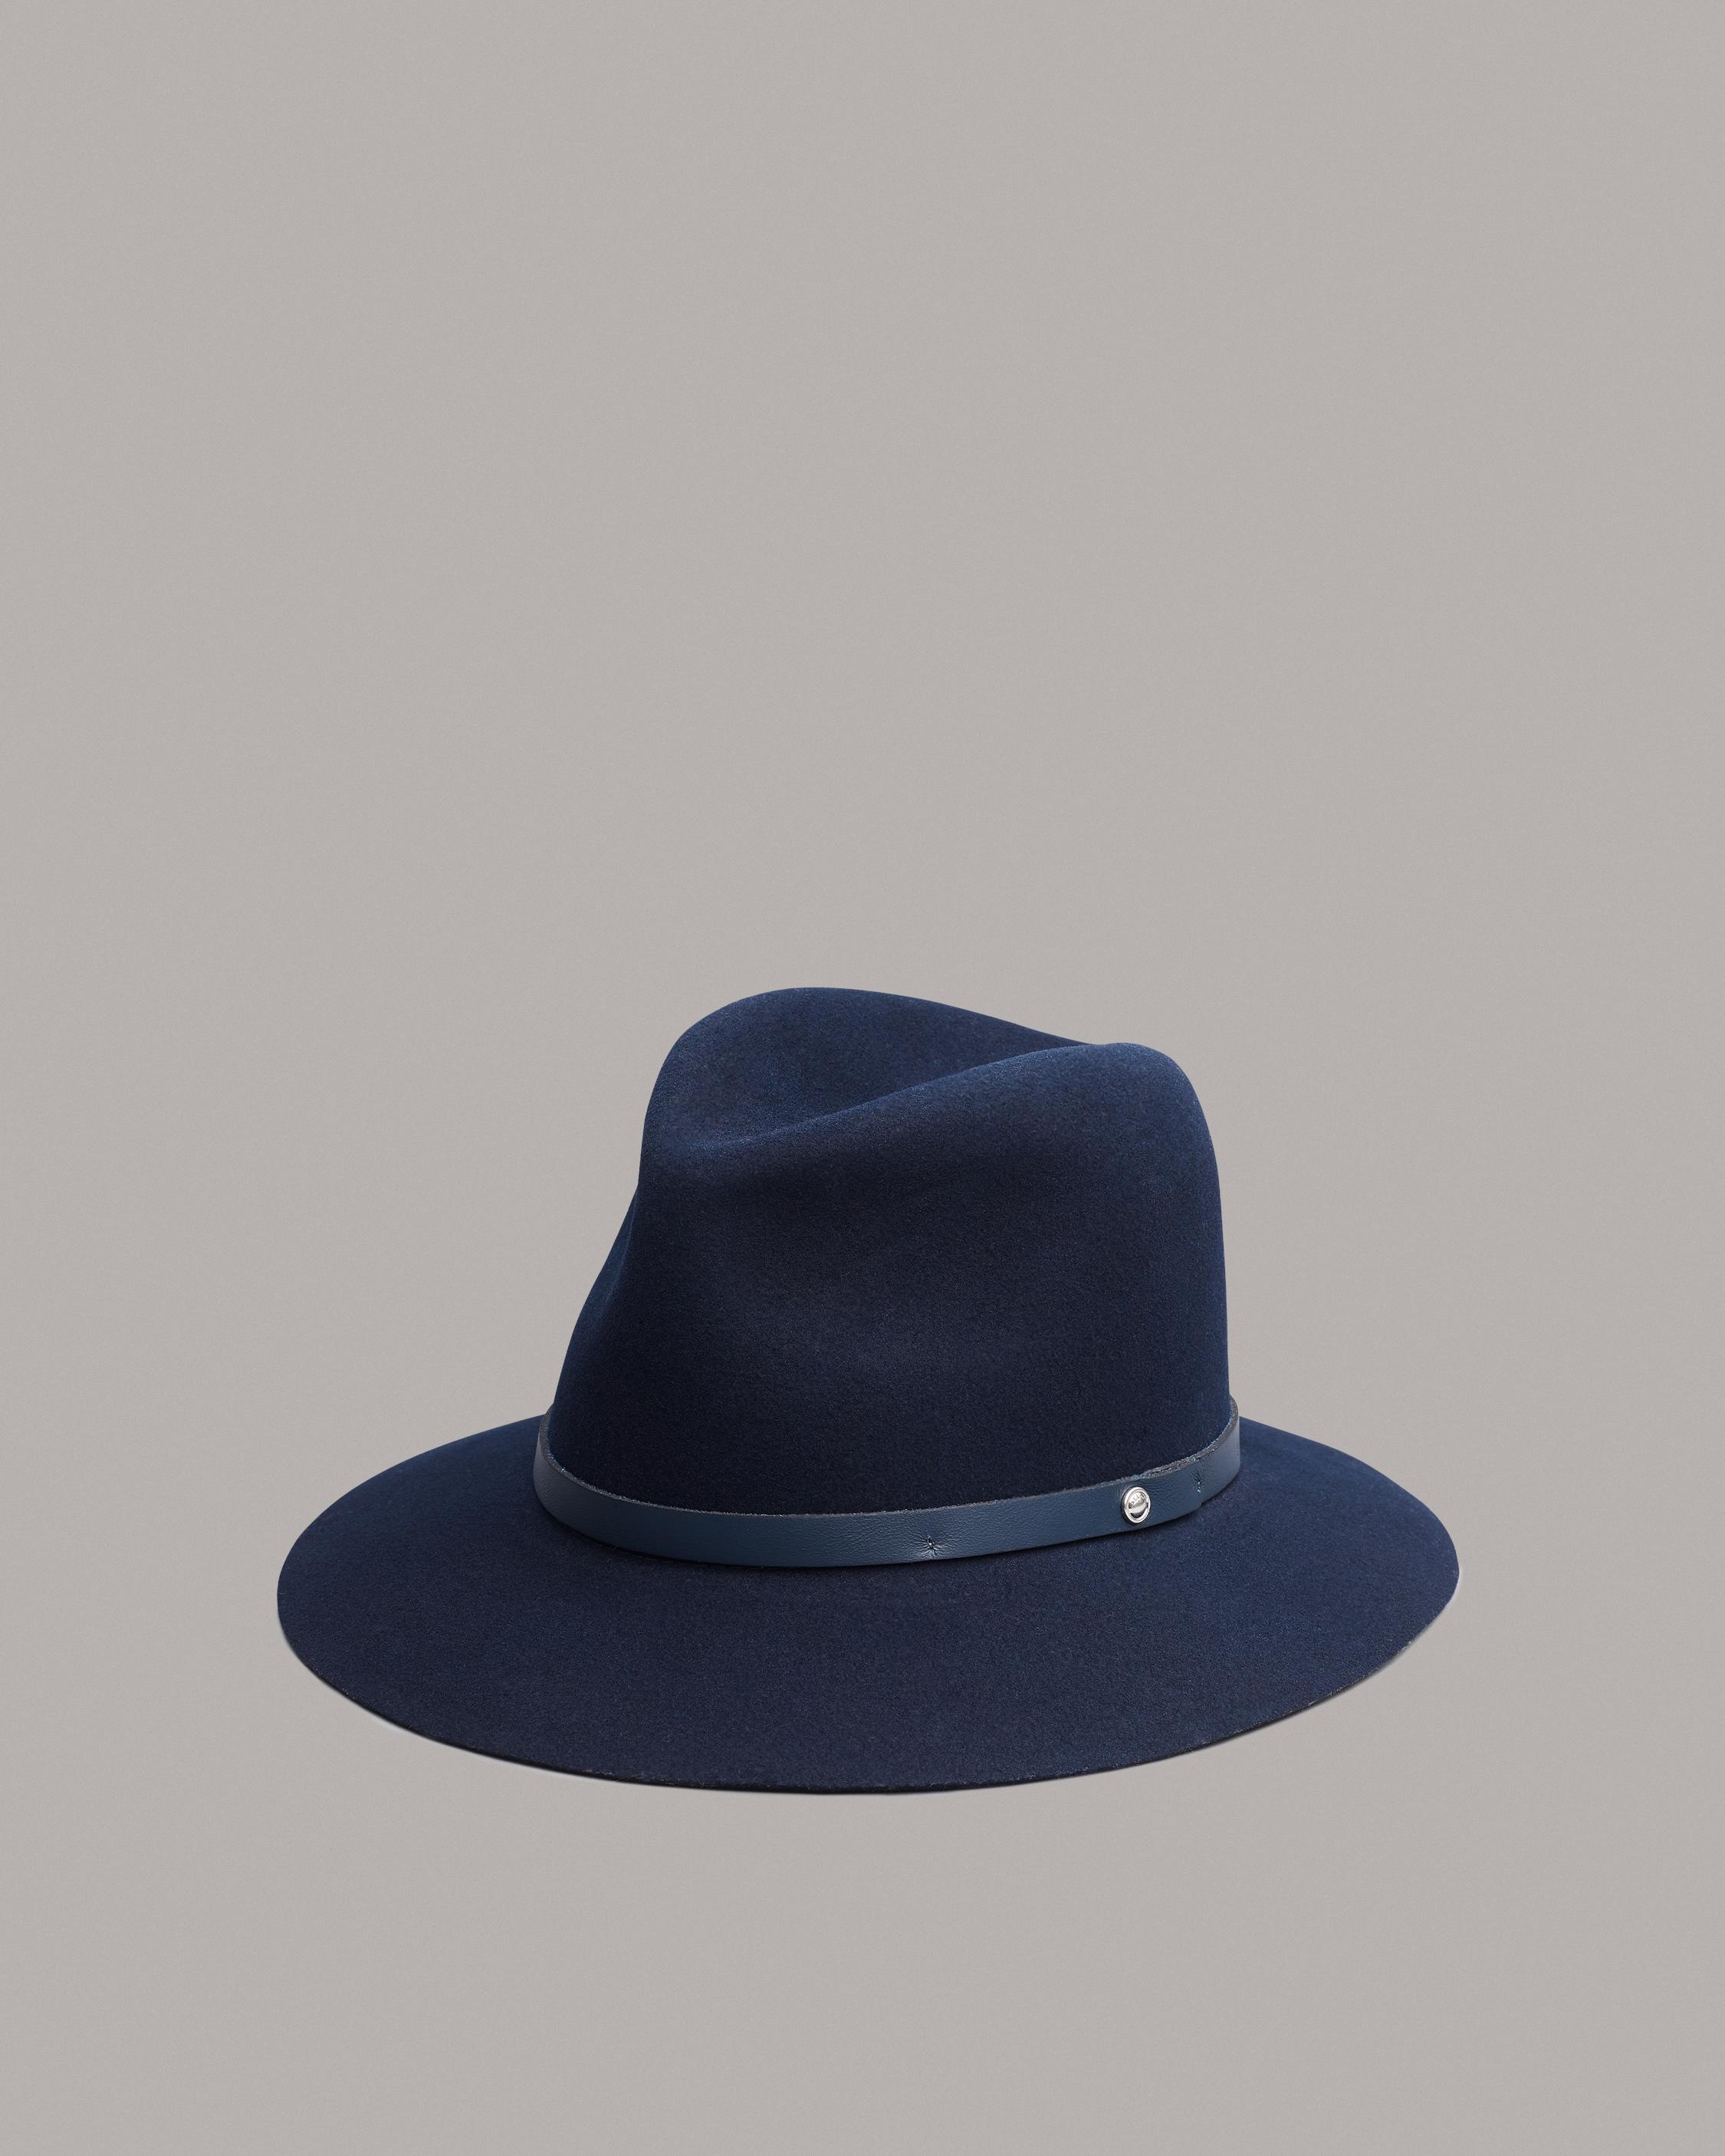 Floppy Brim Fedora
Wool Hat - 1